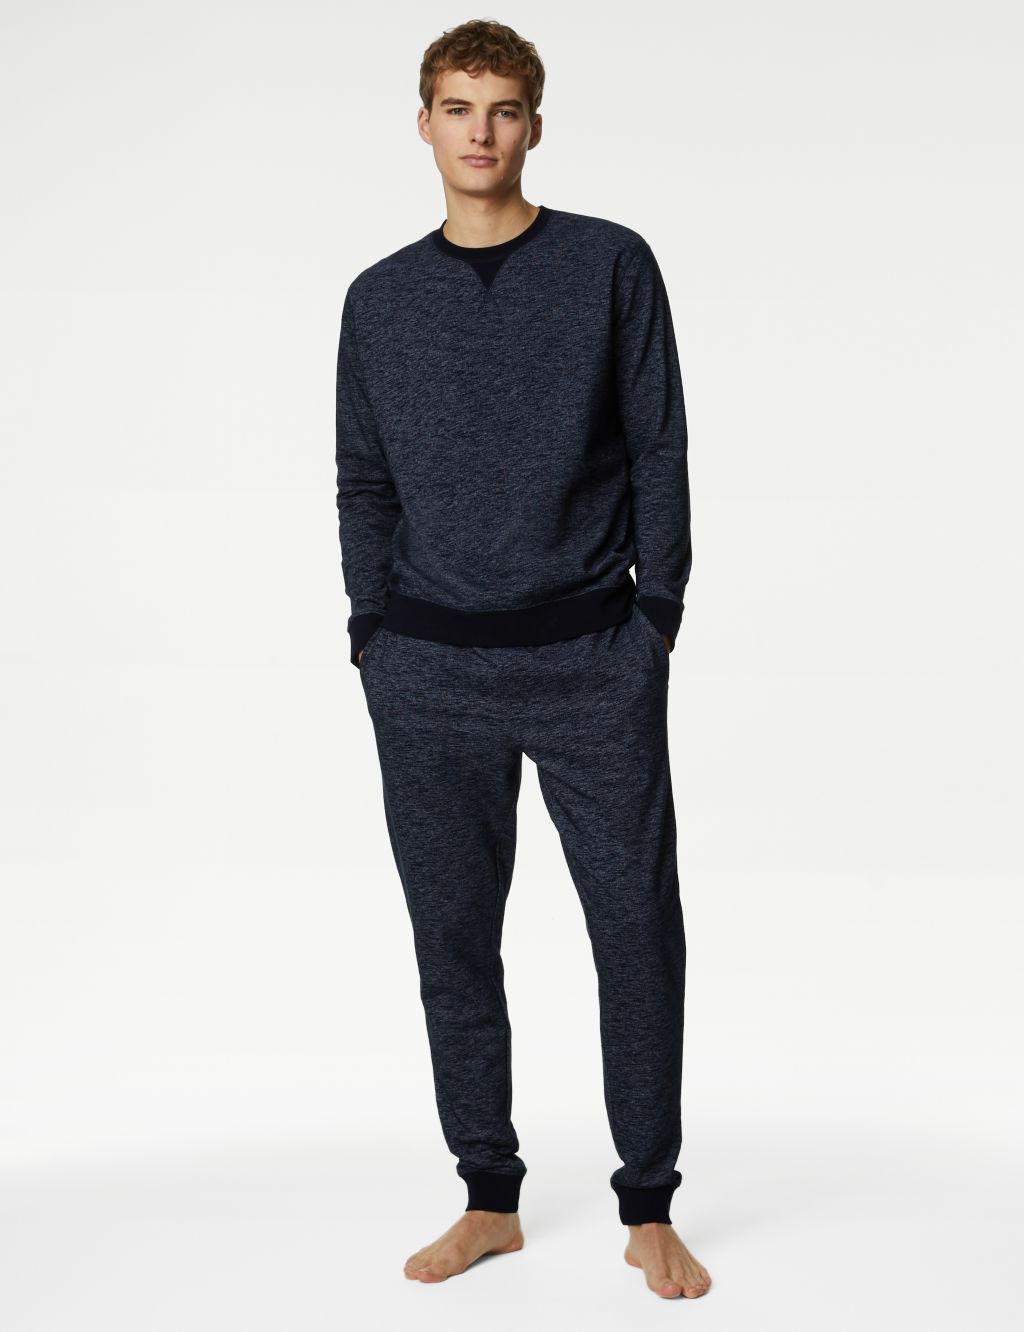 Cotton Rich Space Dye Loungewear Sweatshirt image 1